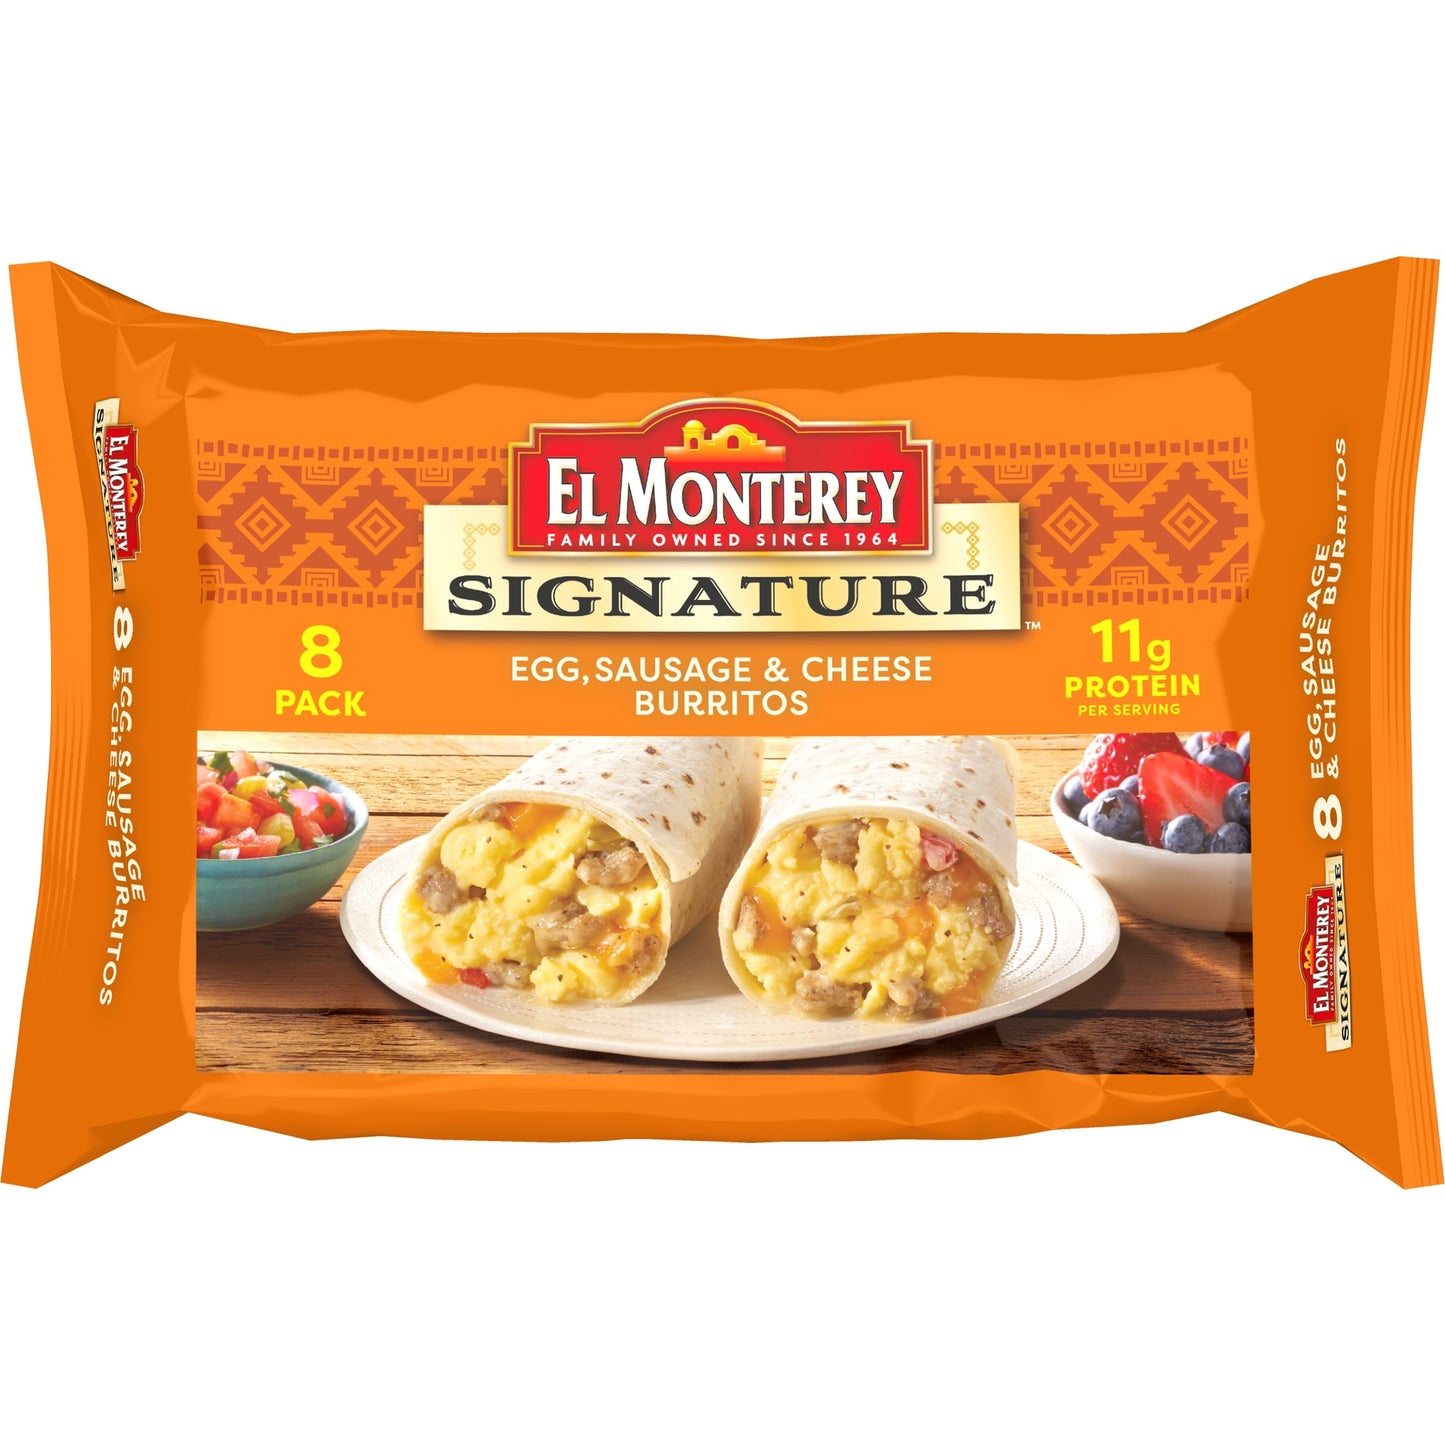 El Monterey Signature Egg, Sausage & Cheese Breakfast Burritos 36 oz, 8 Ct (Frozen)